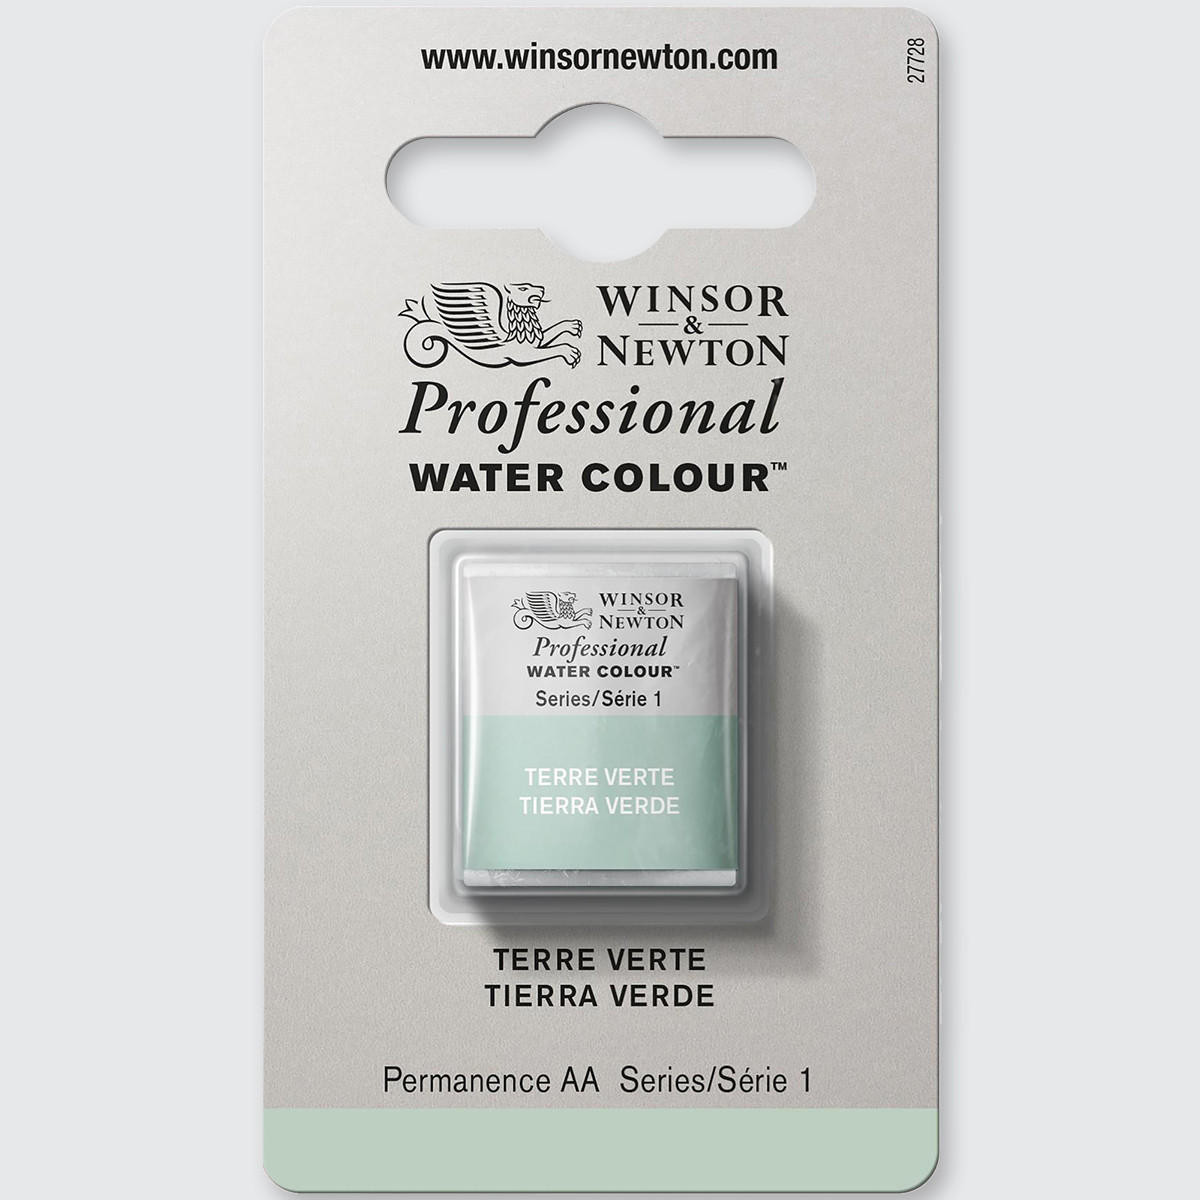 Winsor & Newton Professional Water Colour Half Pan Terre Verte